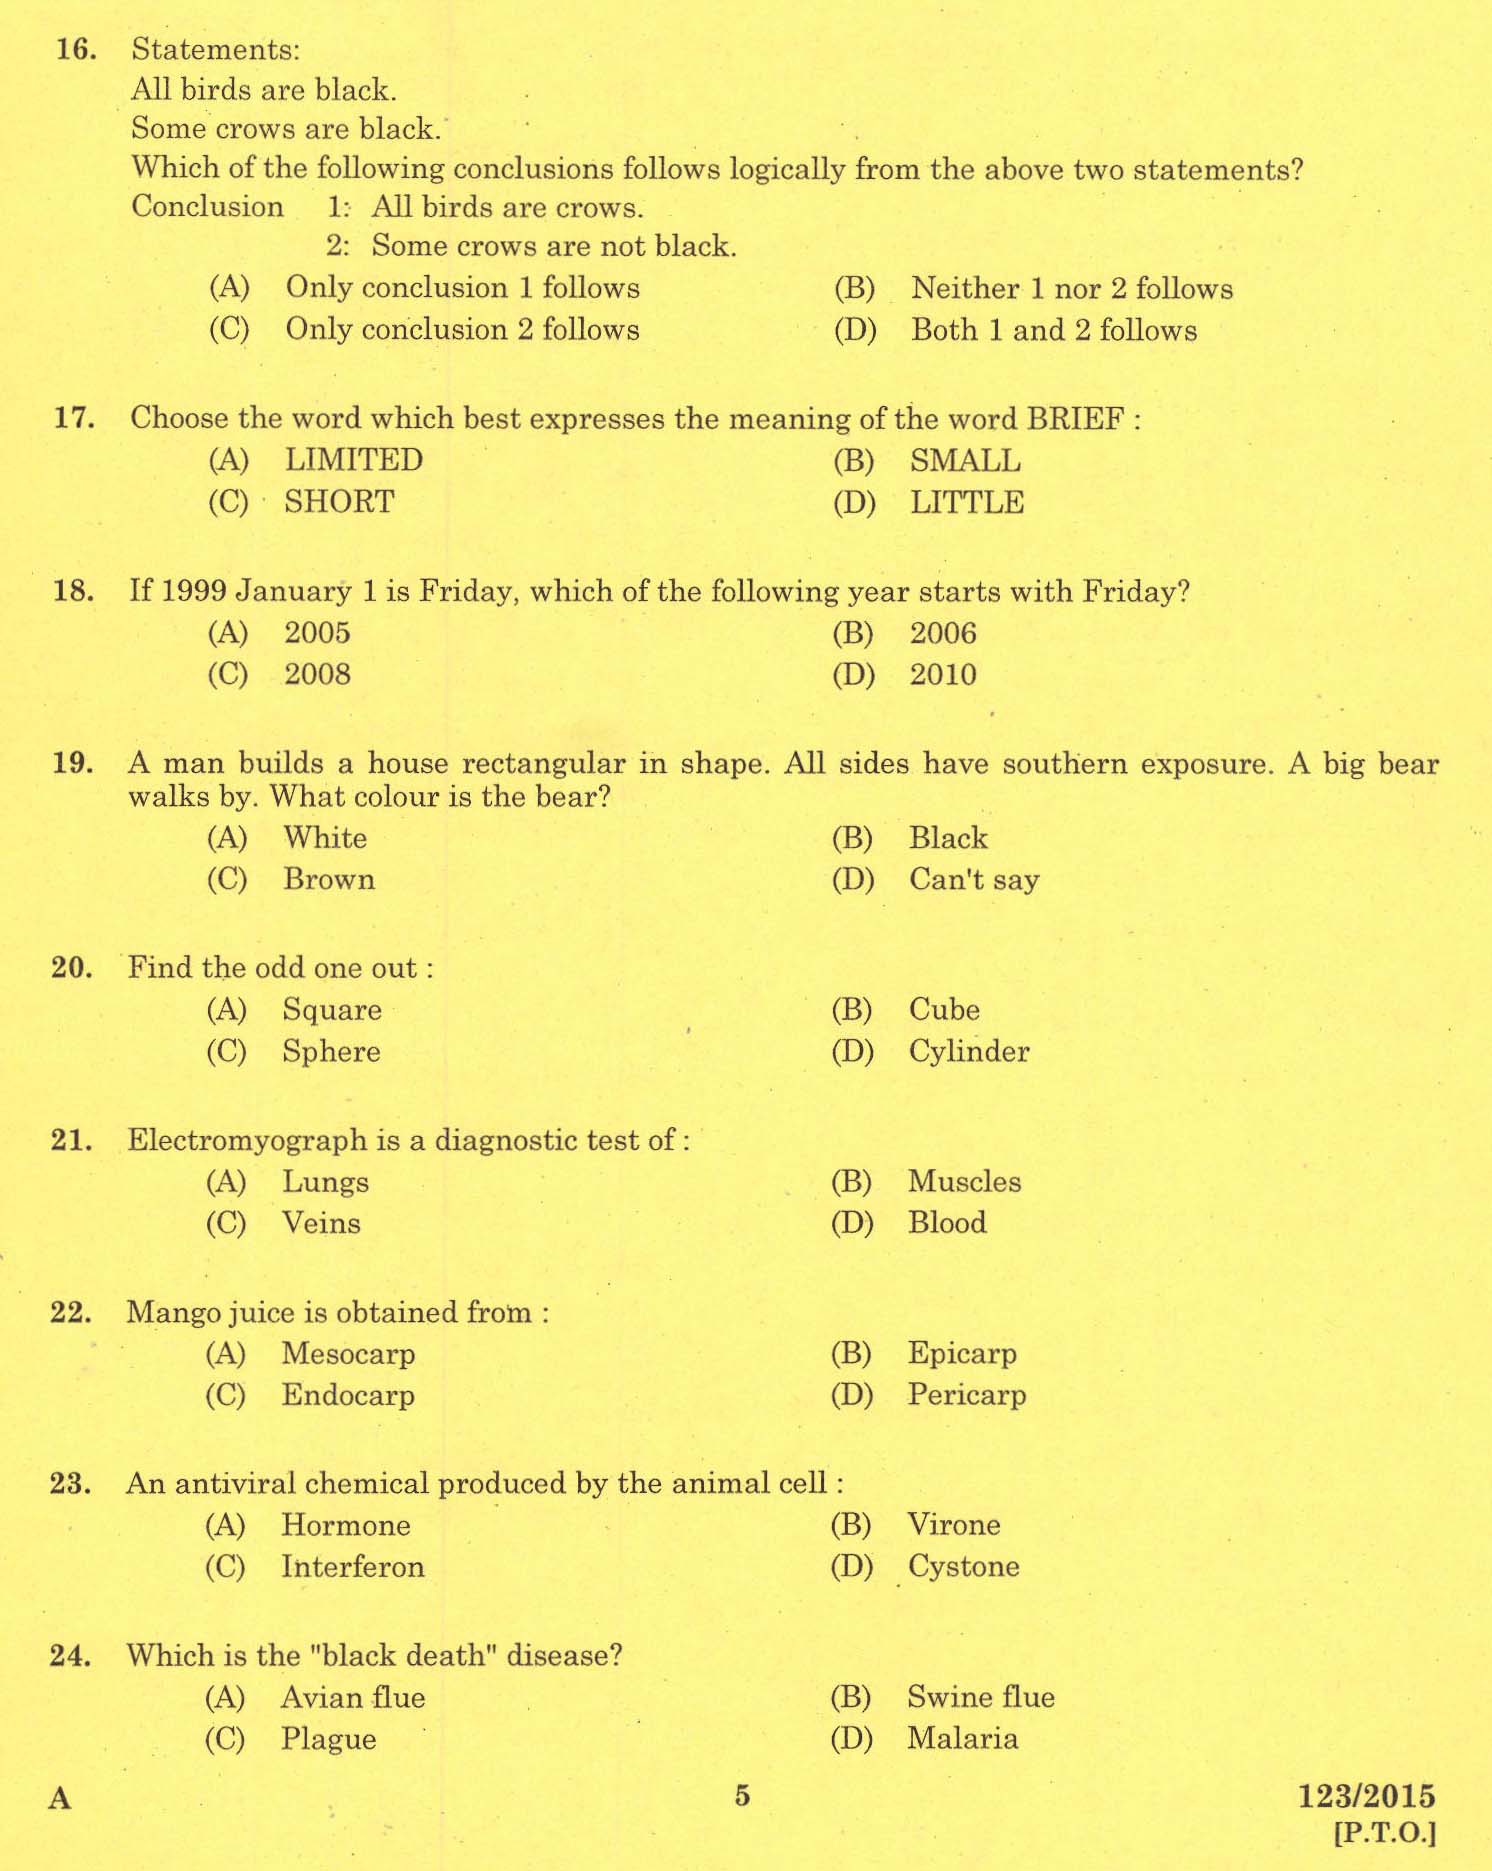 Kerala PSC Administrative Officer Exam Code 1232015 3